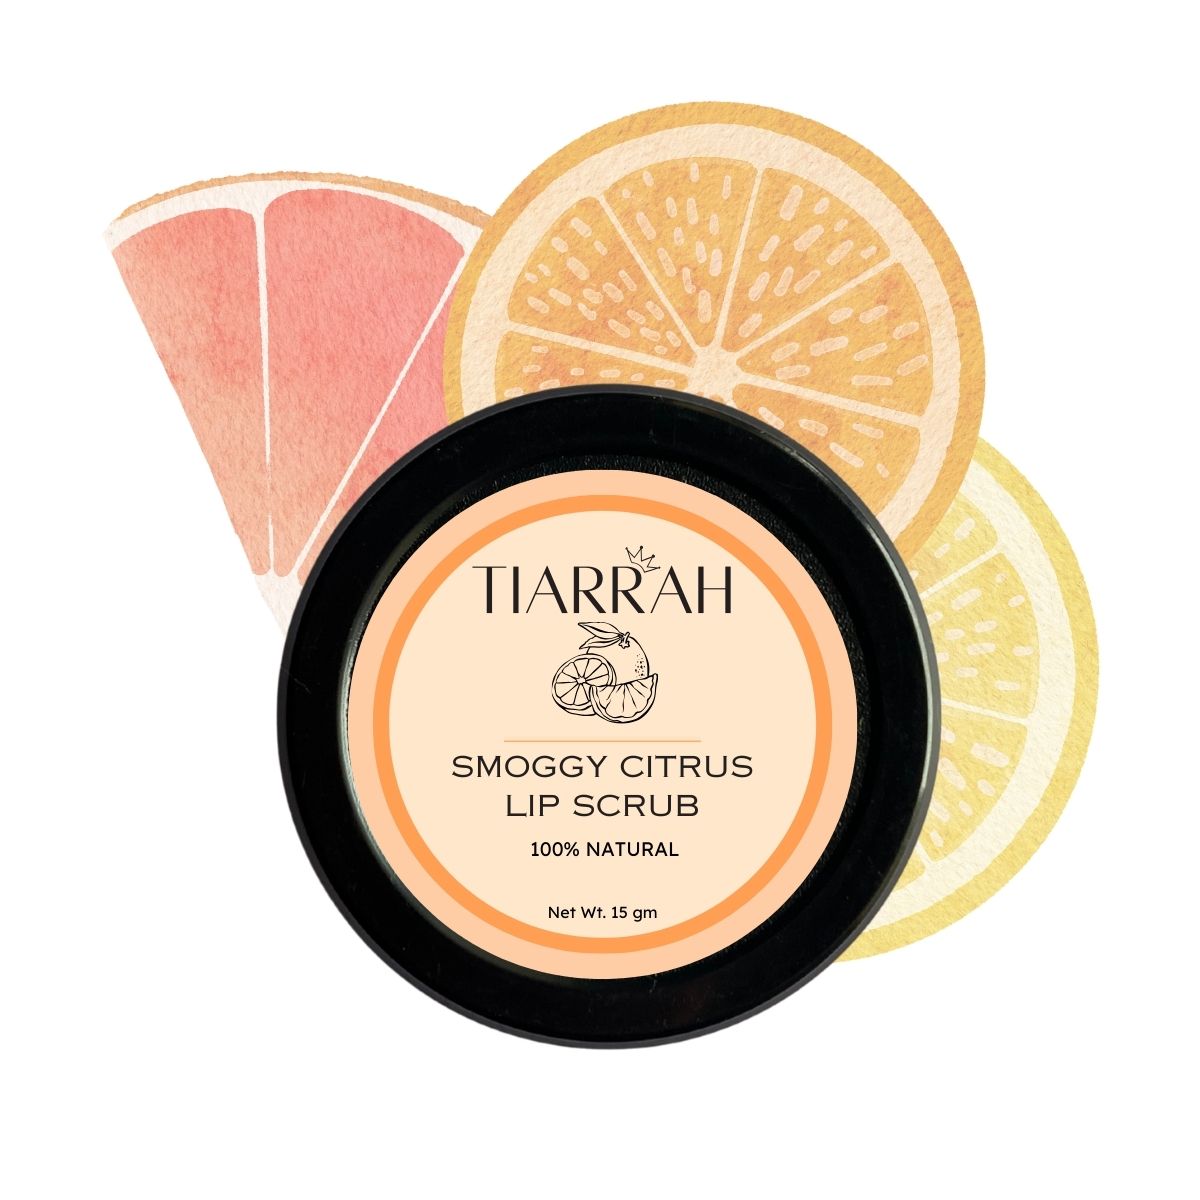 Tiarrah Smoggy Citrus Lip Scrub: Natural, Organic, Non-Toxic - The Luxury Bath and Body Care Shop